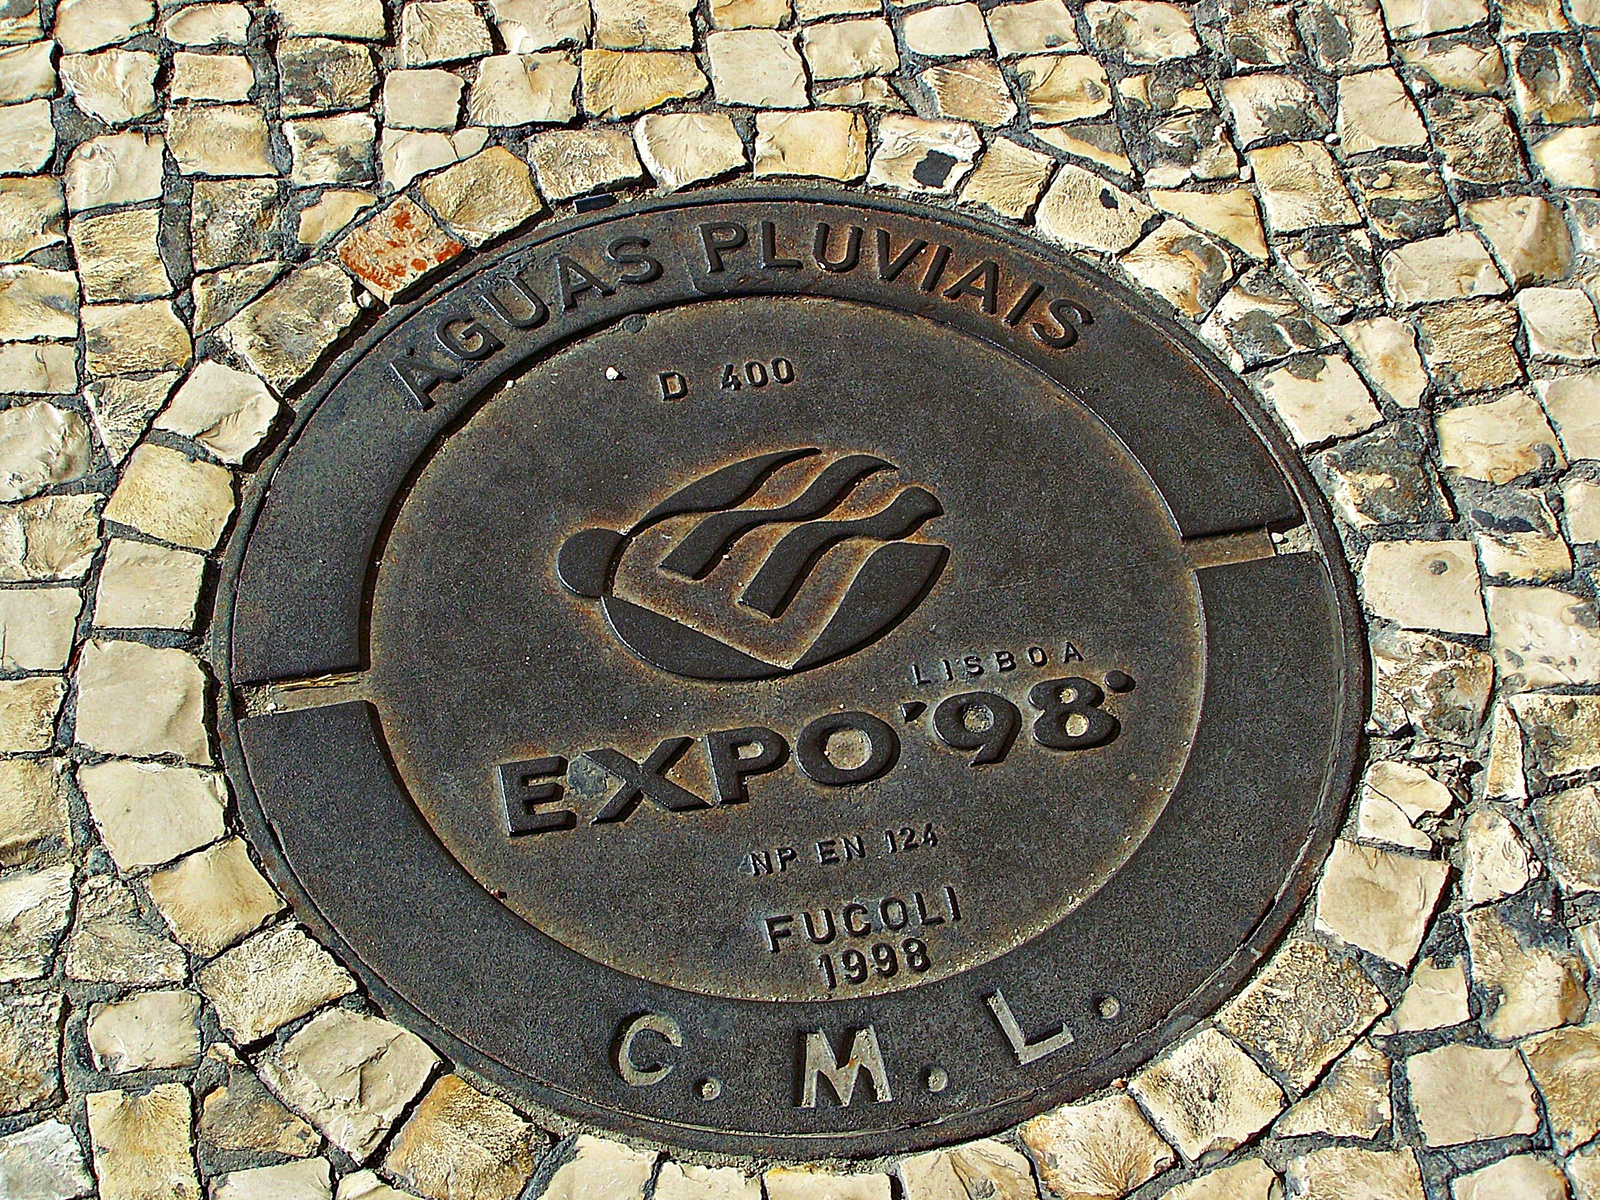 EXPO '98